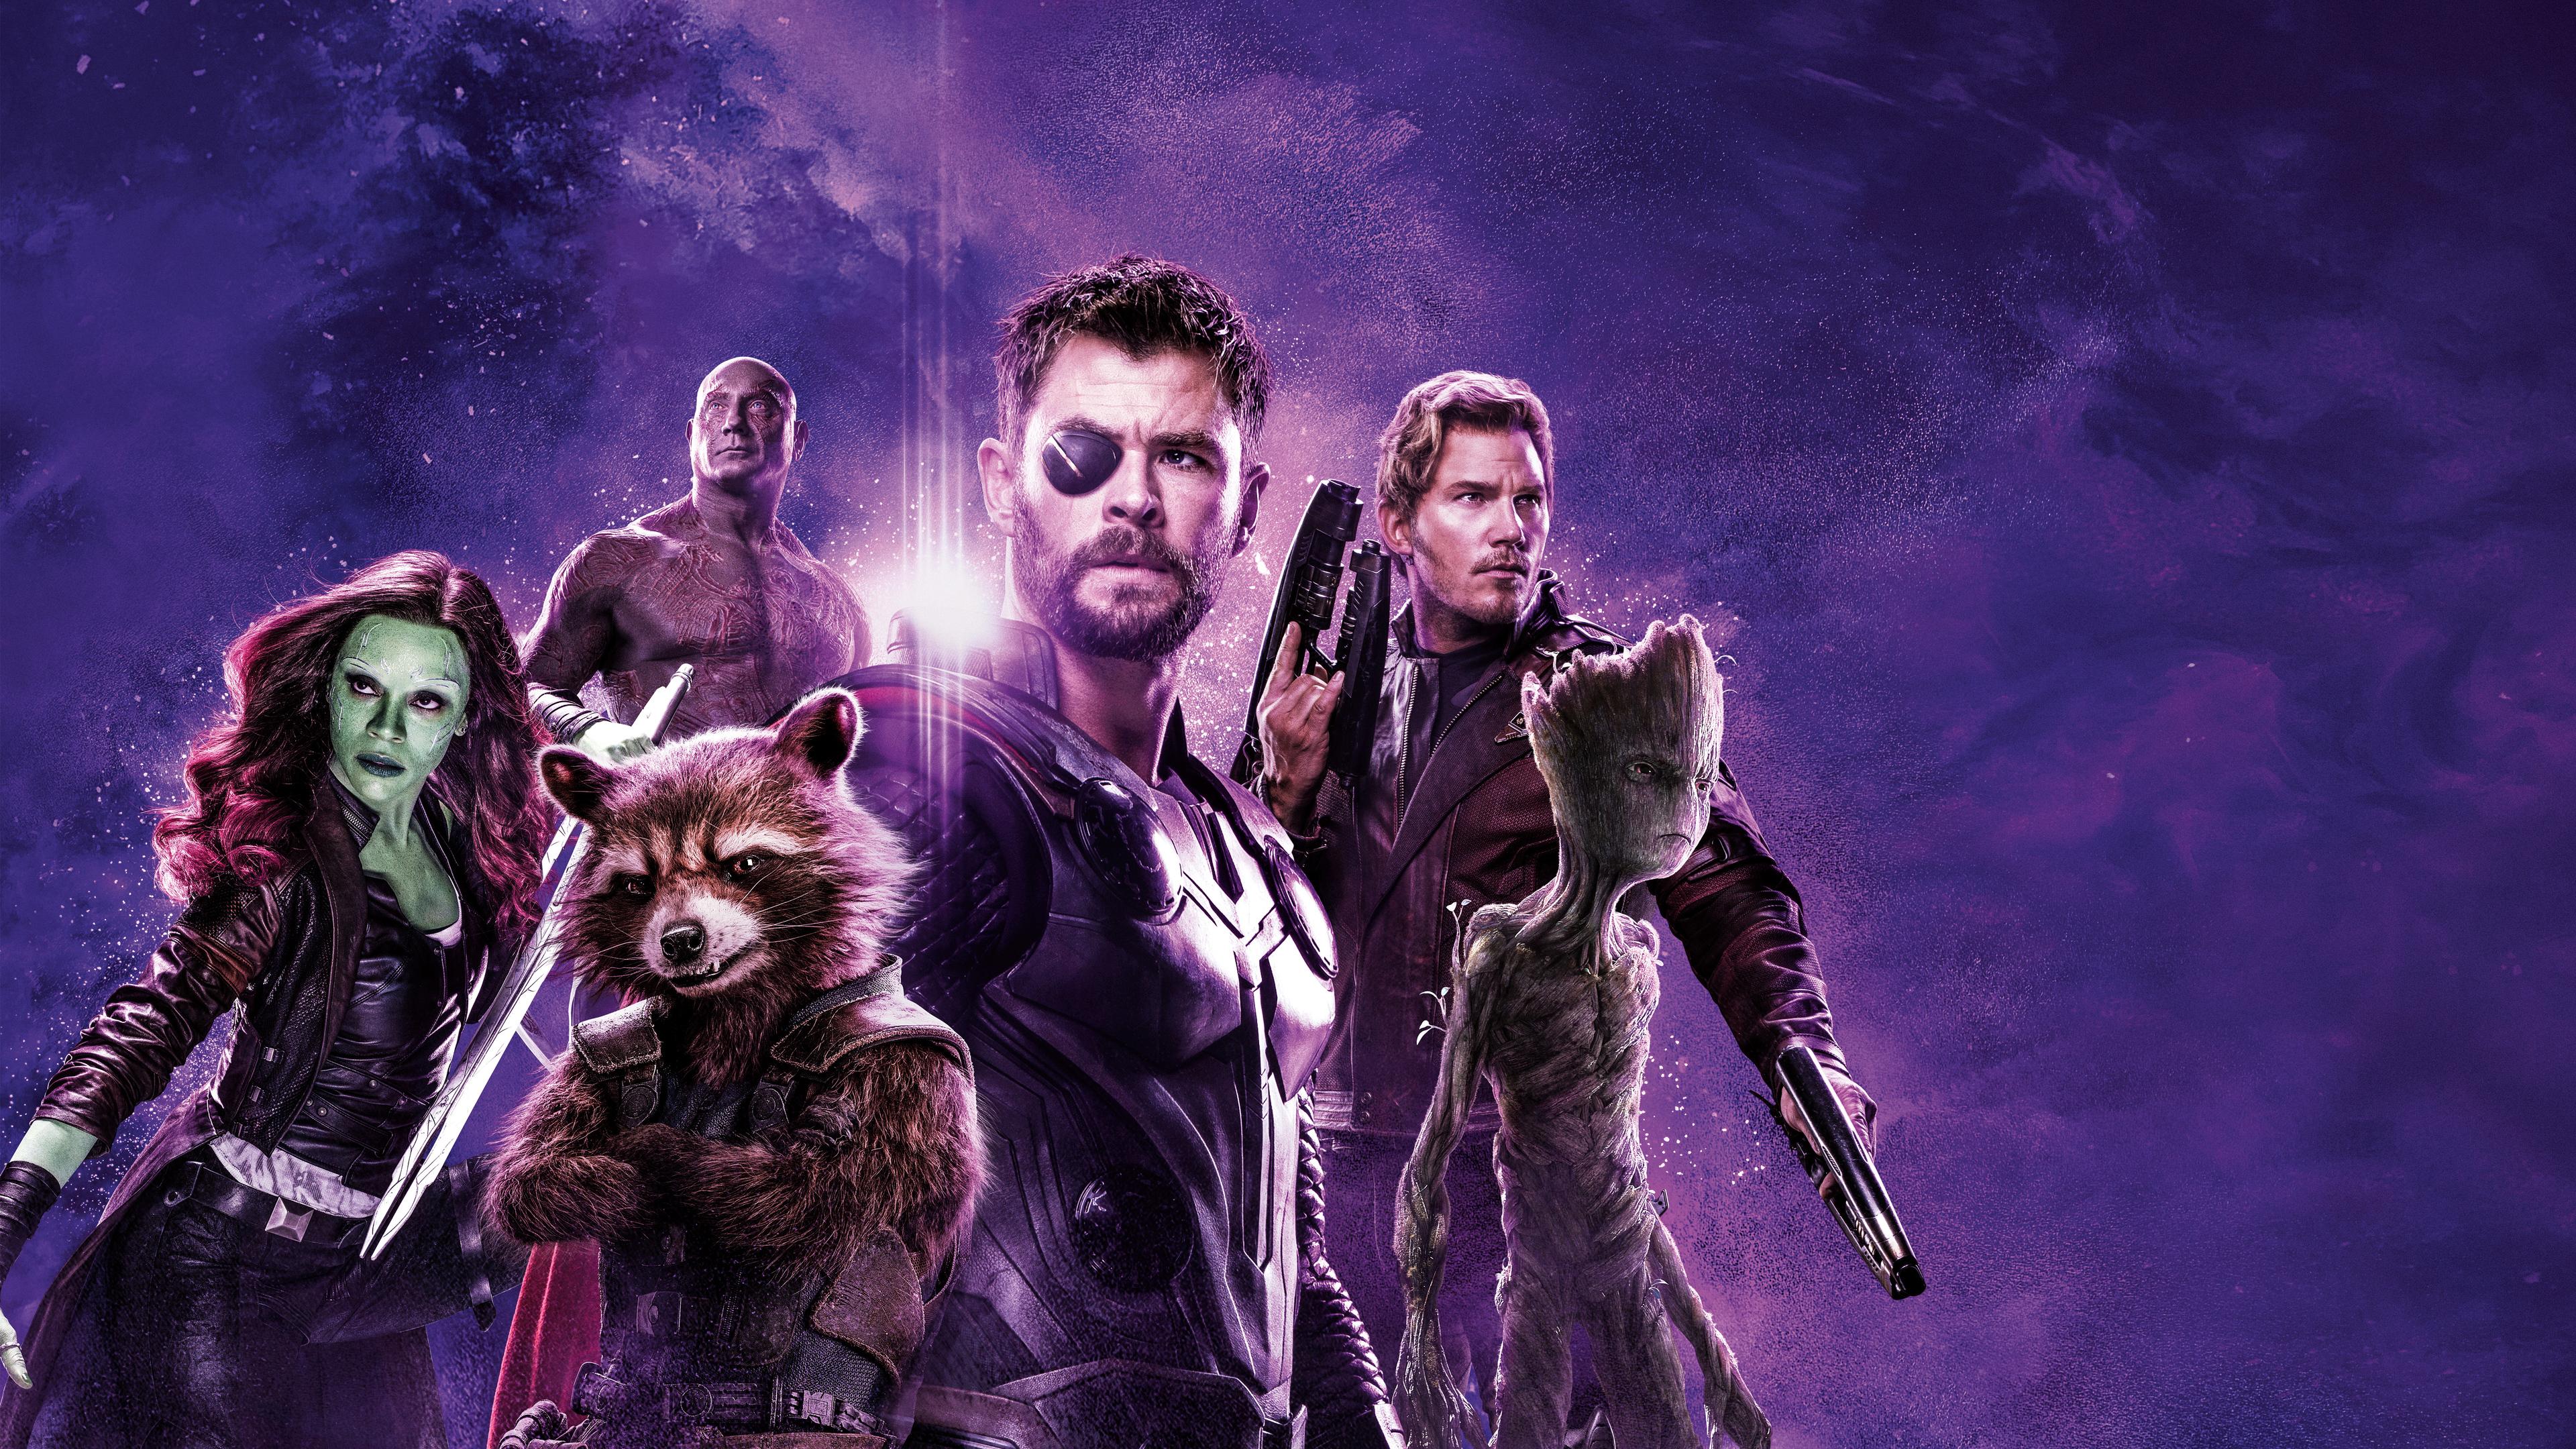 Wallpapers 4k Avengers Infinity War Power Stone Poster 4k 2018